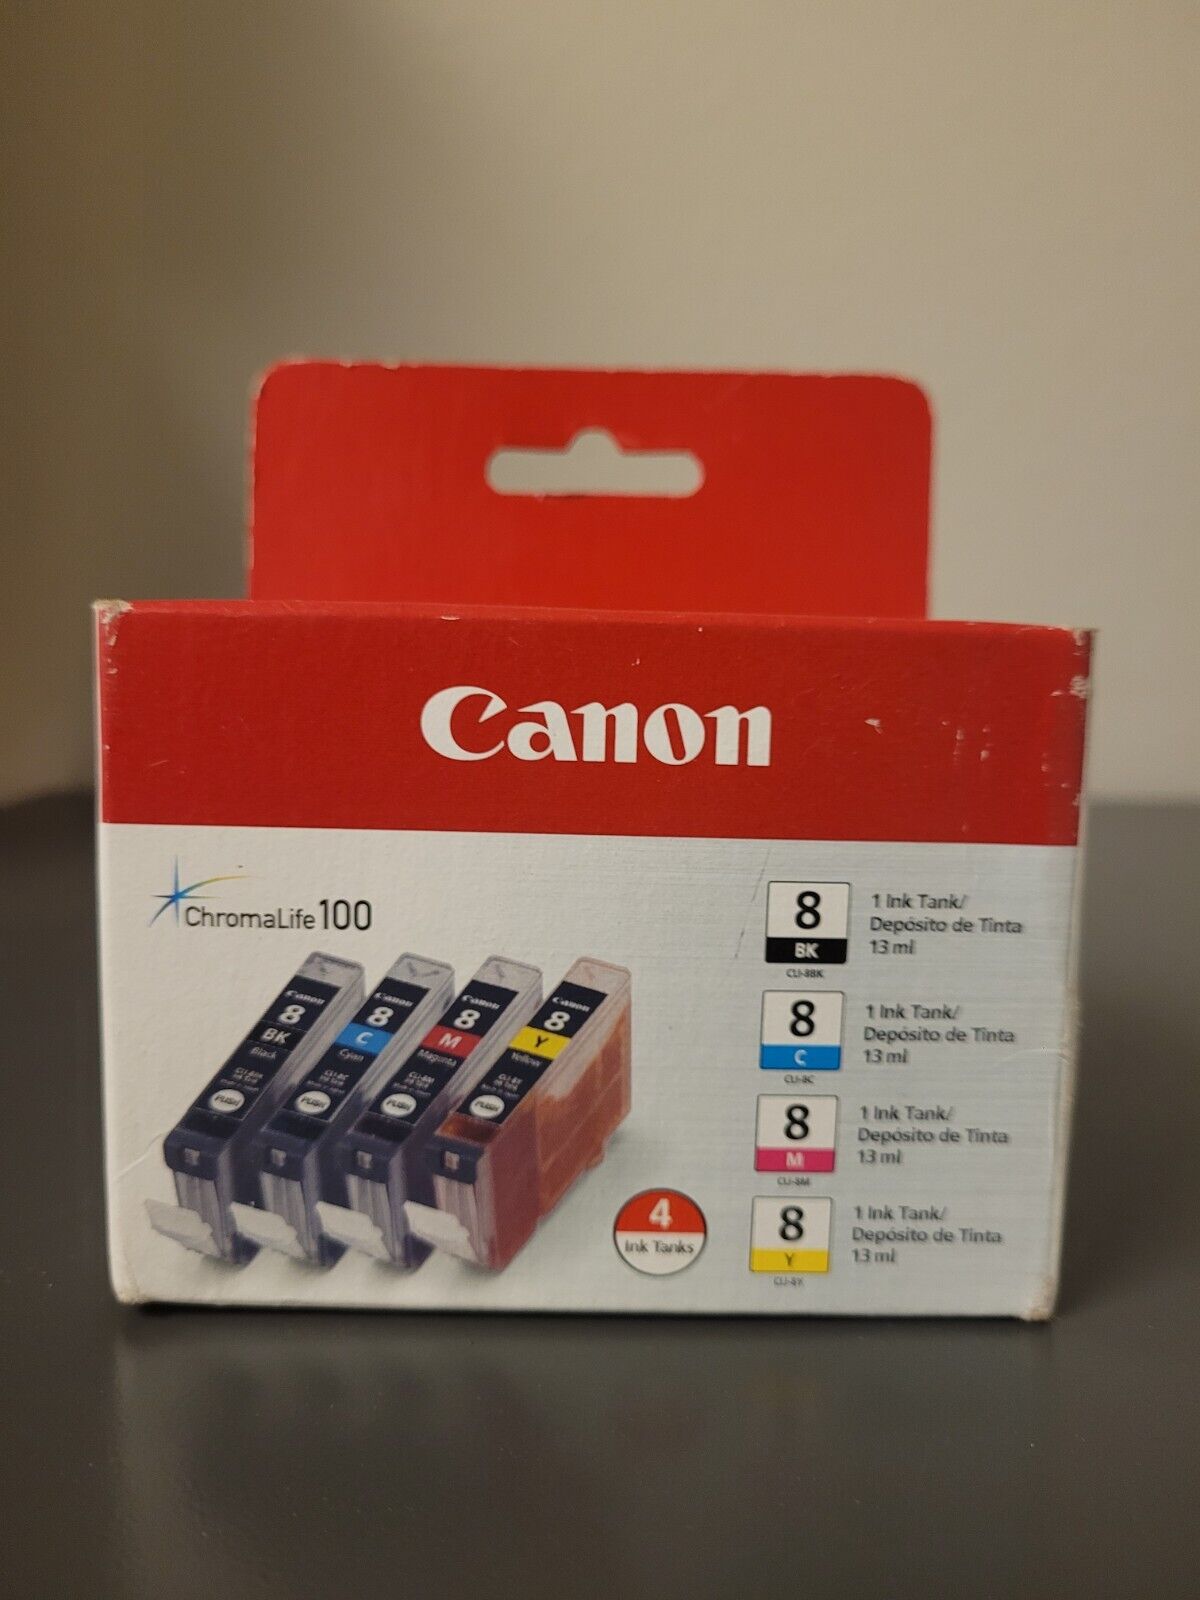 Canon Chromalife 100 Ink Cartridges New Old Stock 4 Cartridges NIB